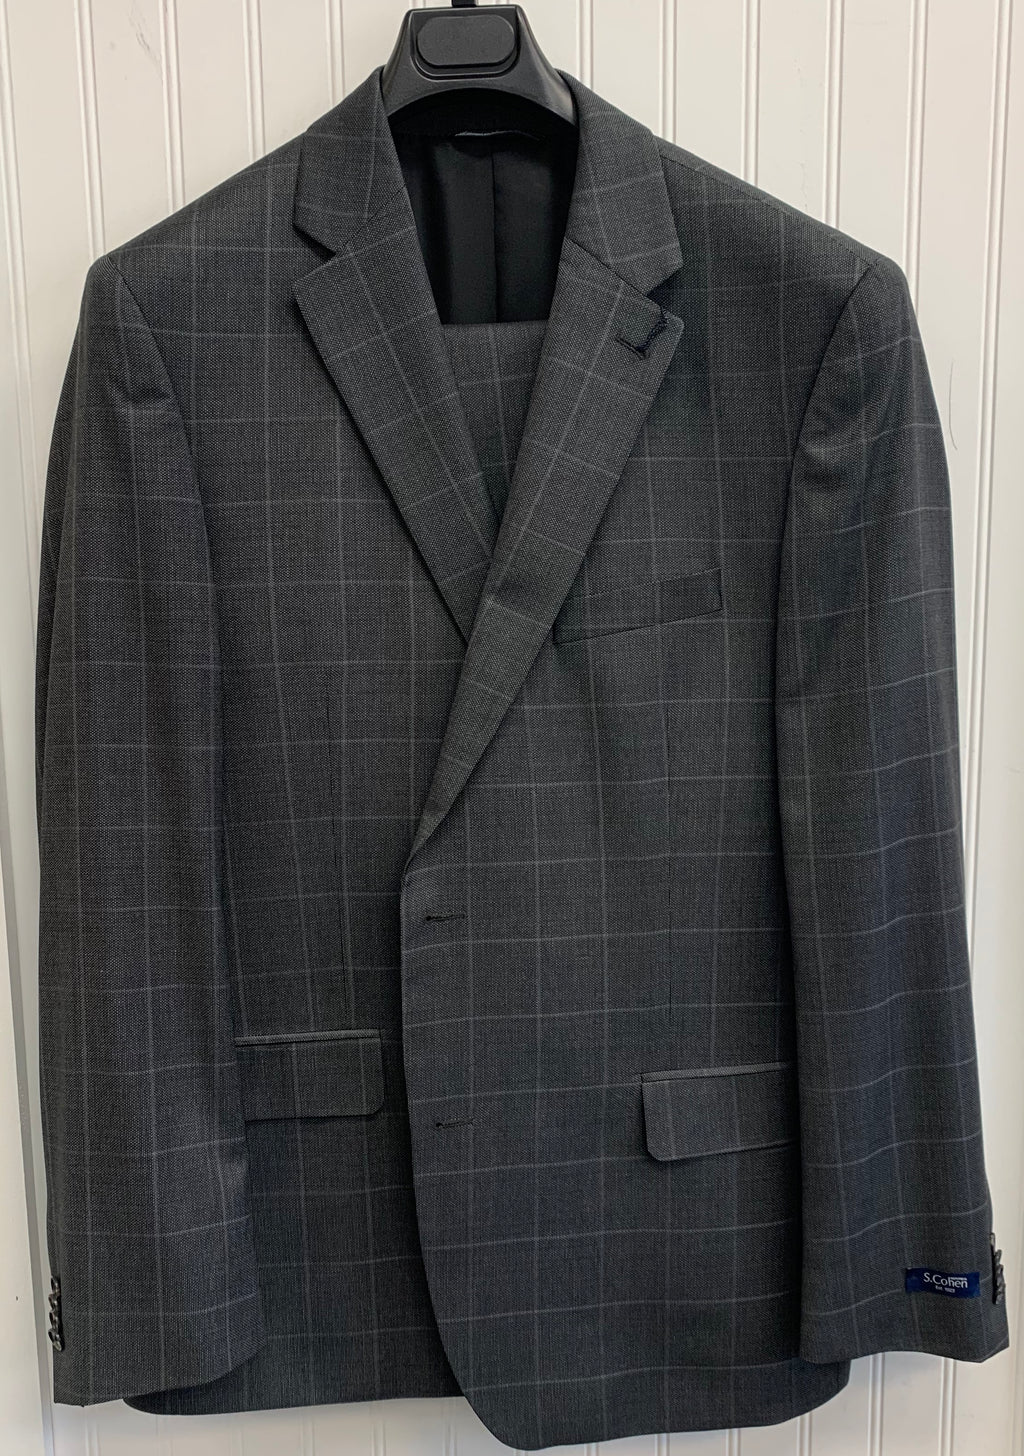 S. Cohen Super 130 Wool Suit- 97-3646 (Charcoal Gray Windowpane)